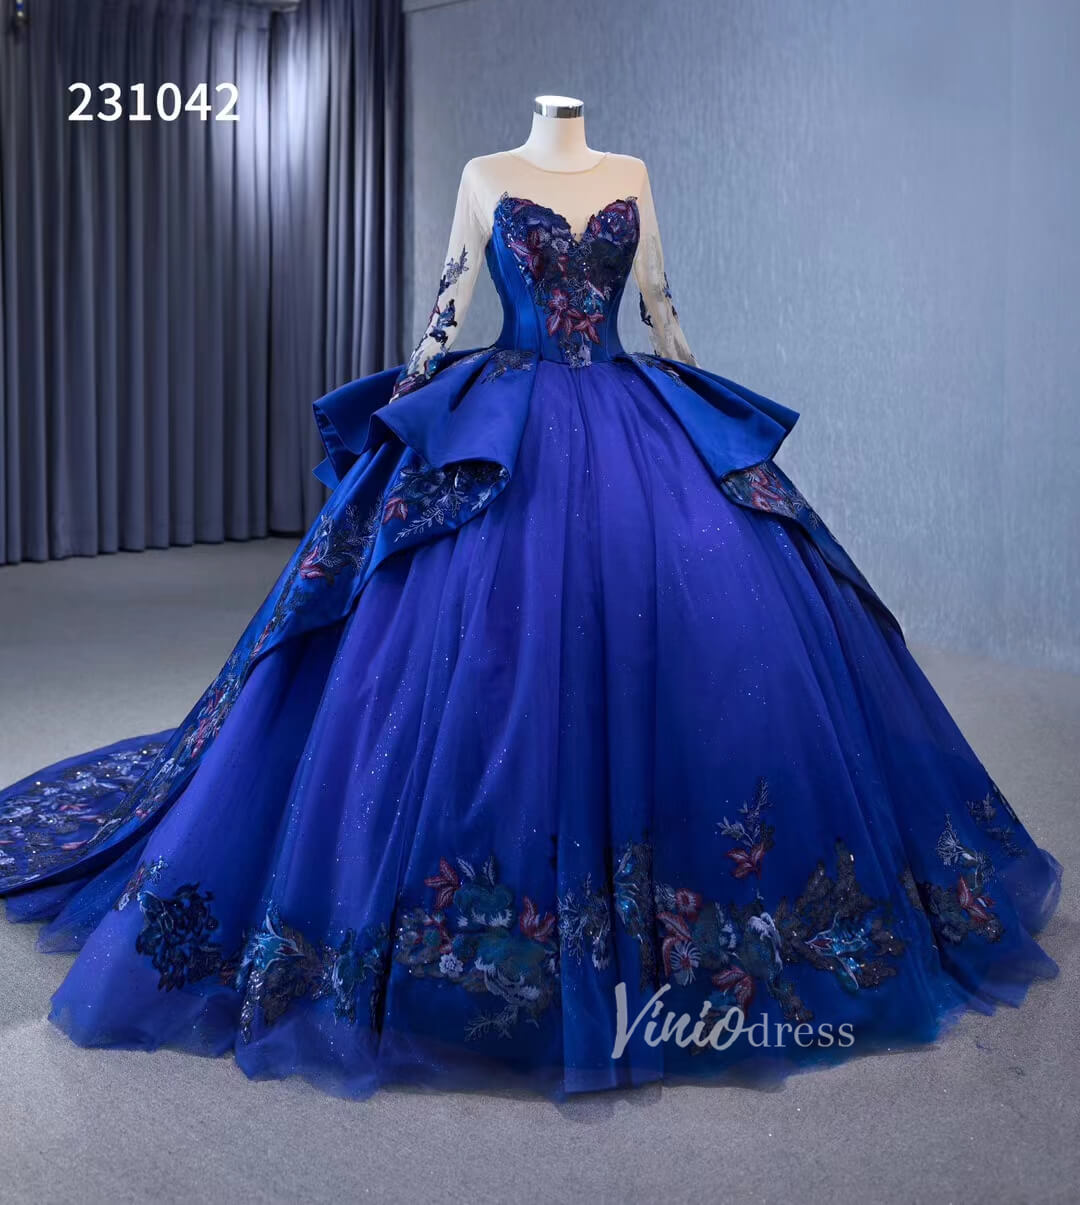 Long Sleeve Blue Ball Gown Wedding Dresses 231042-wedding dresses-Viniodress-Viniodress